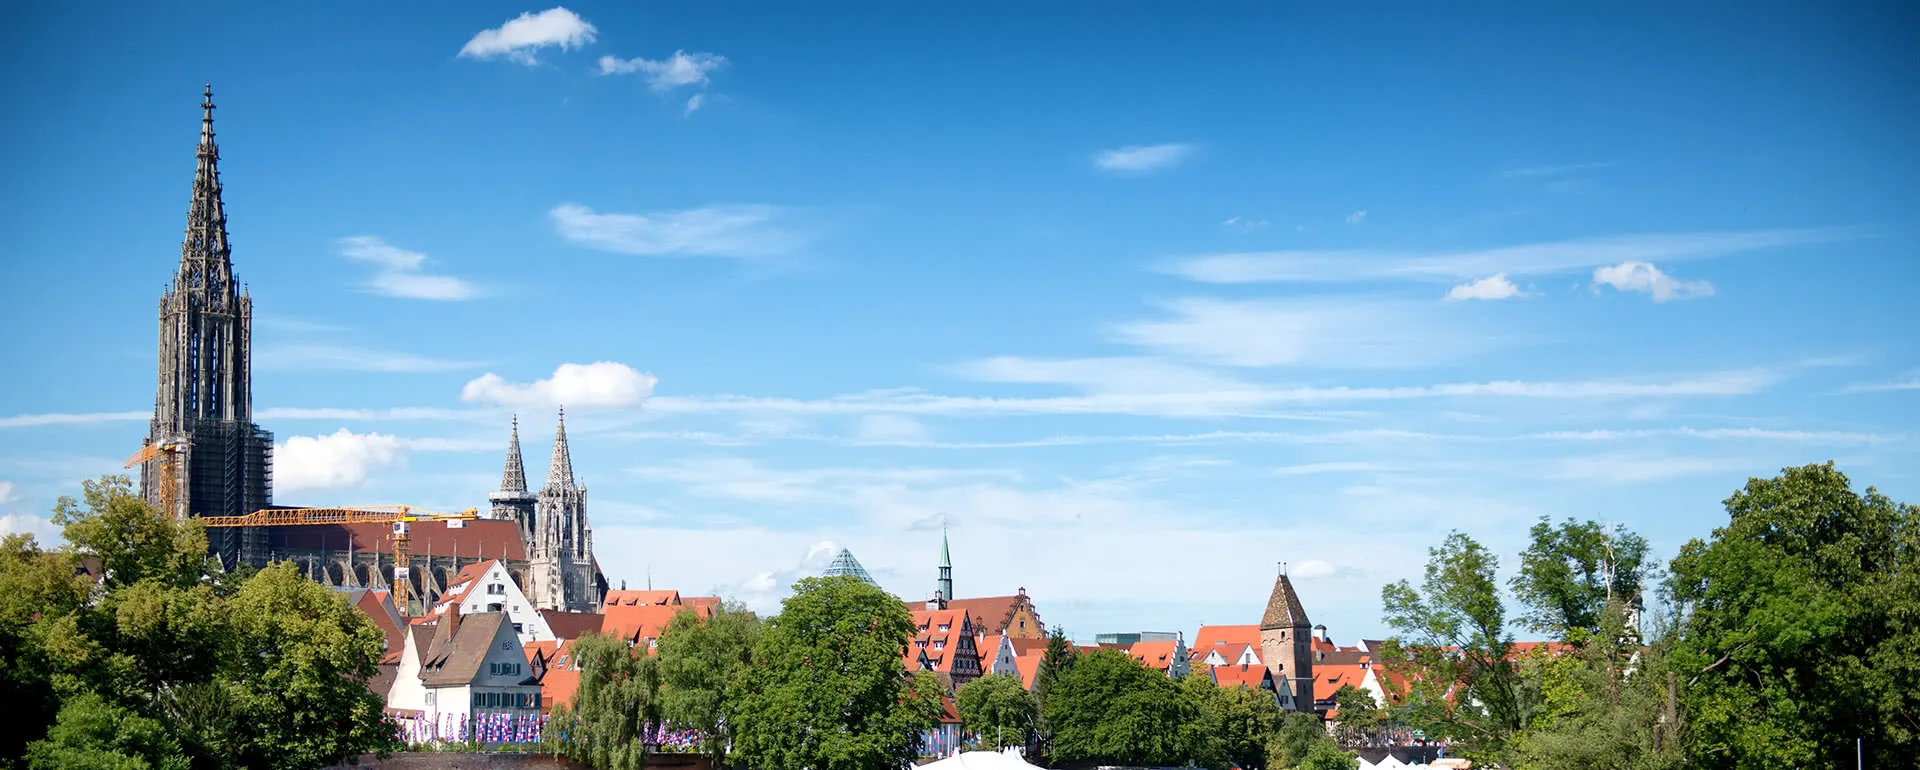 Ulm panorama image